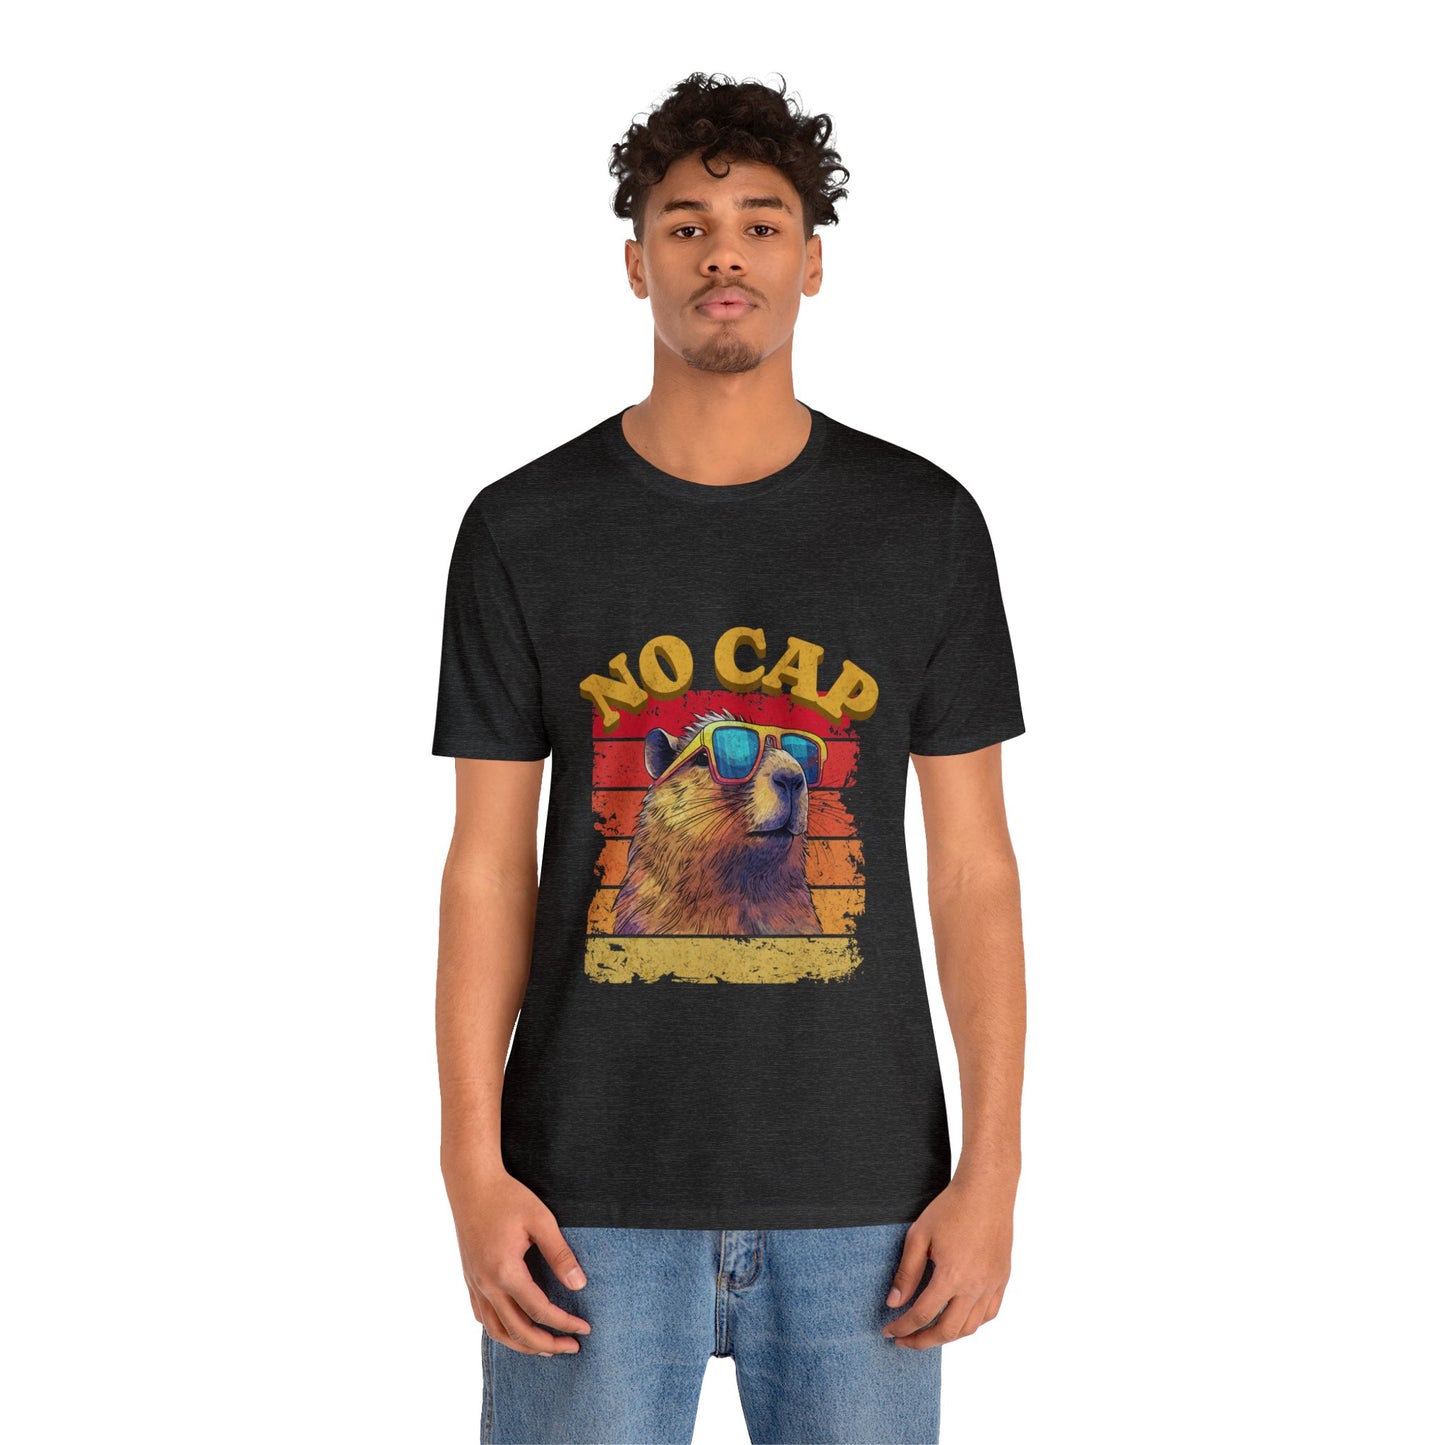 "no cap" capybara tshirt - funny capybara tee - funny tshirt